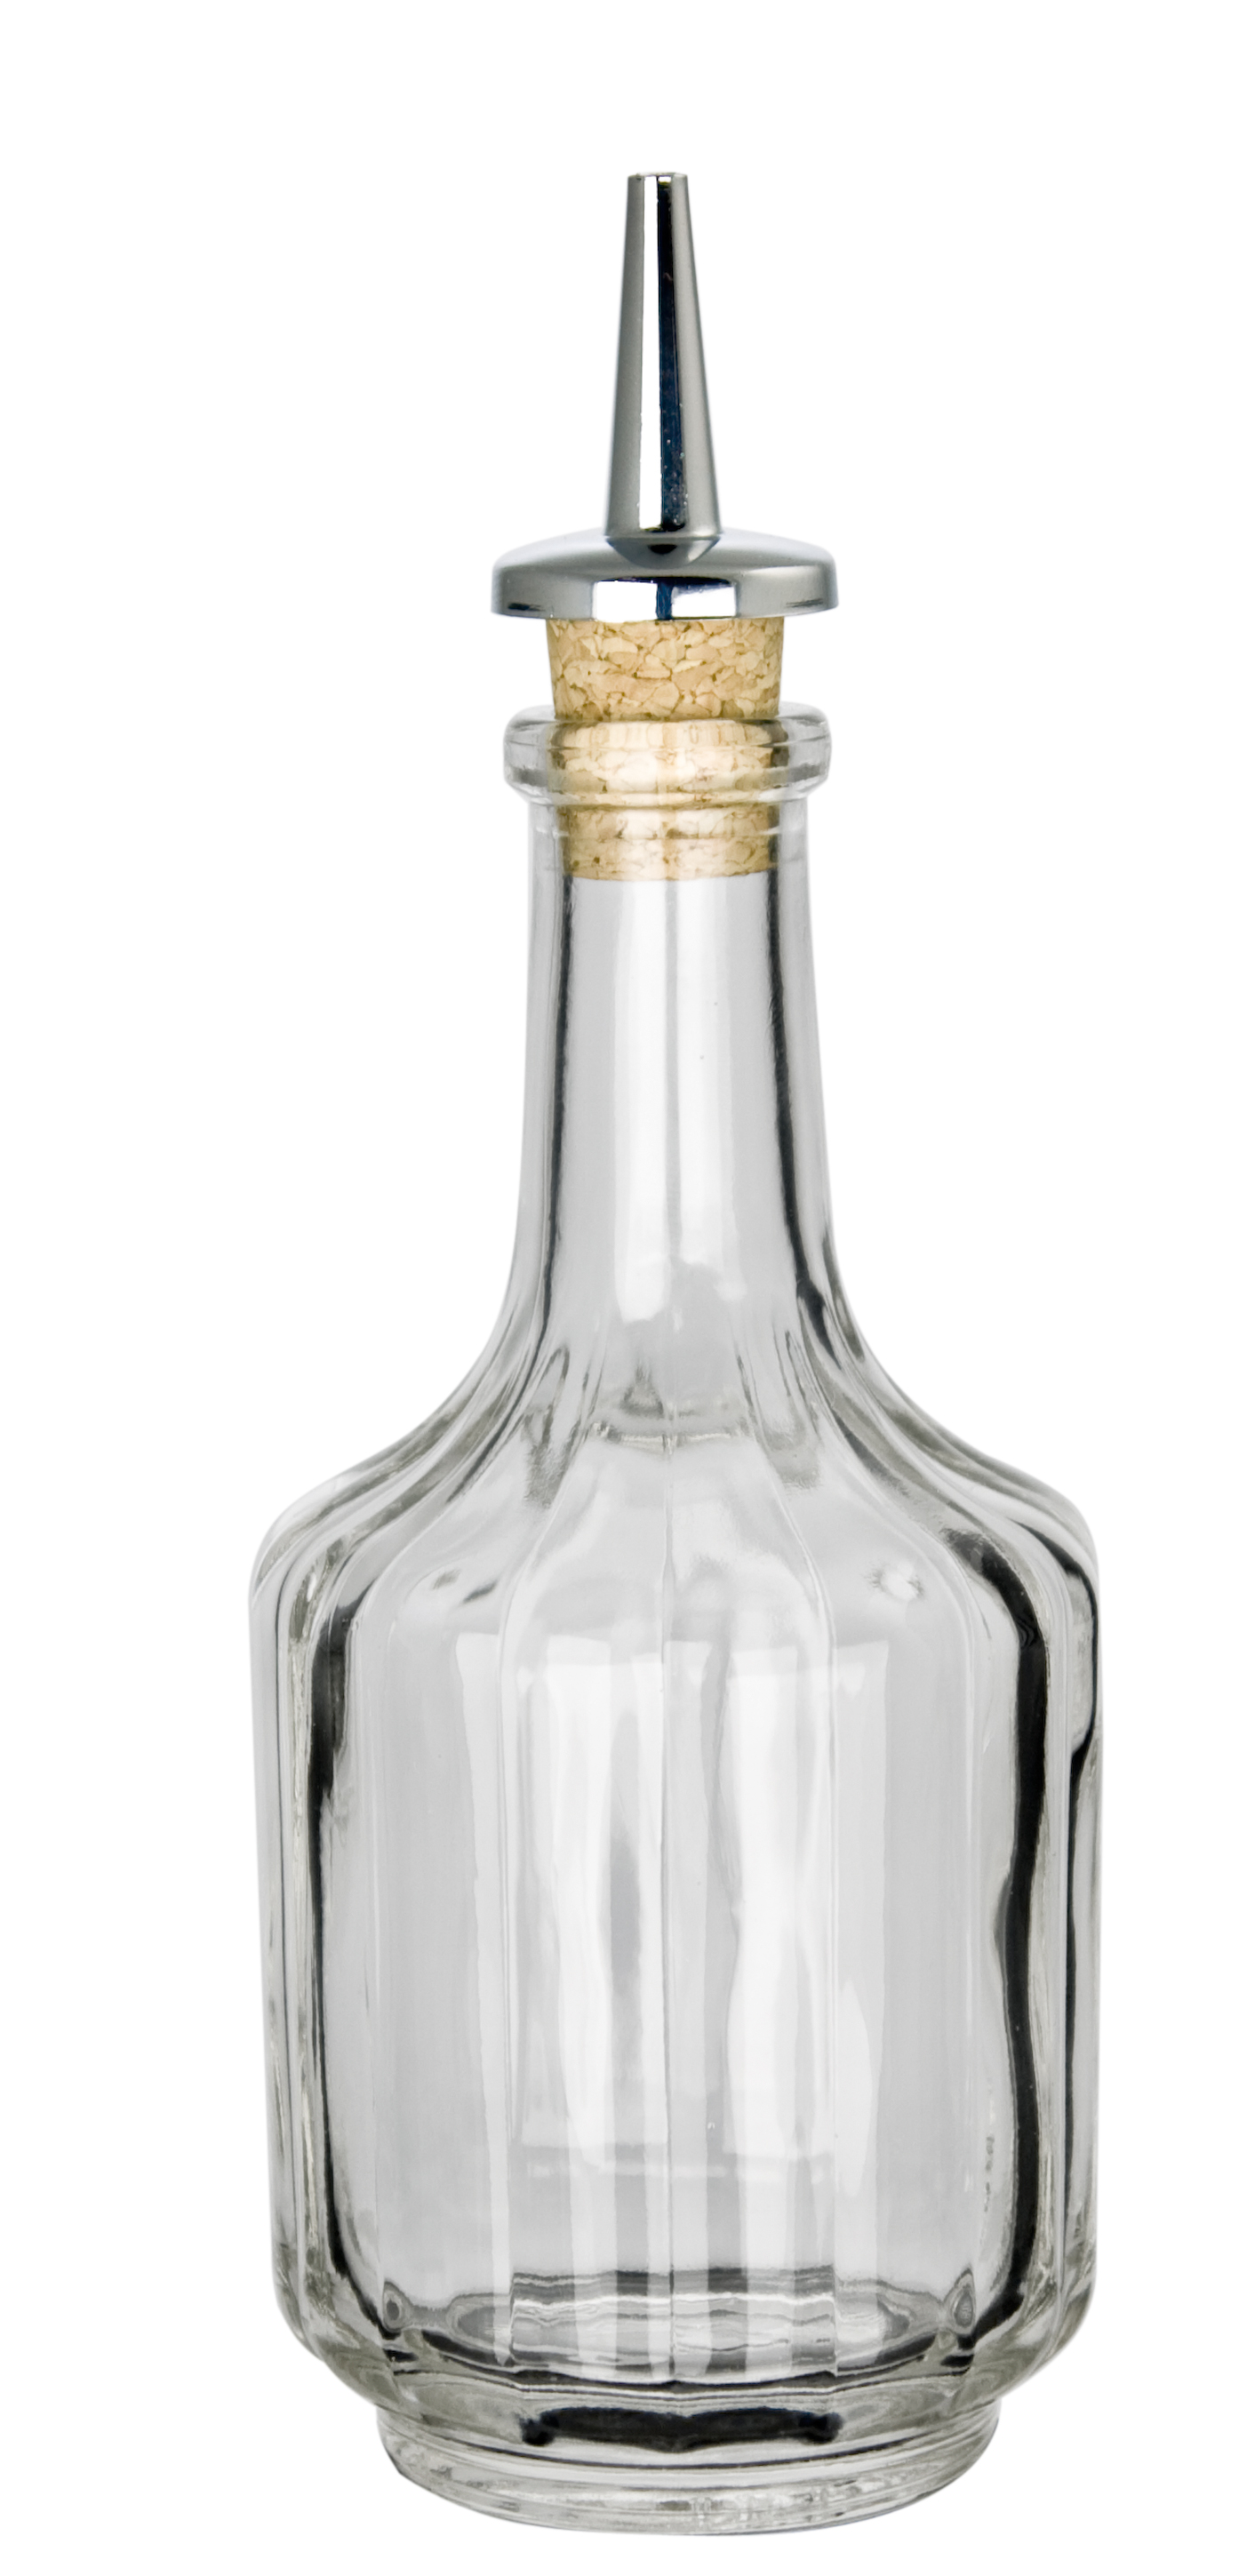 Dash bottle, Italy design - 100ml